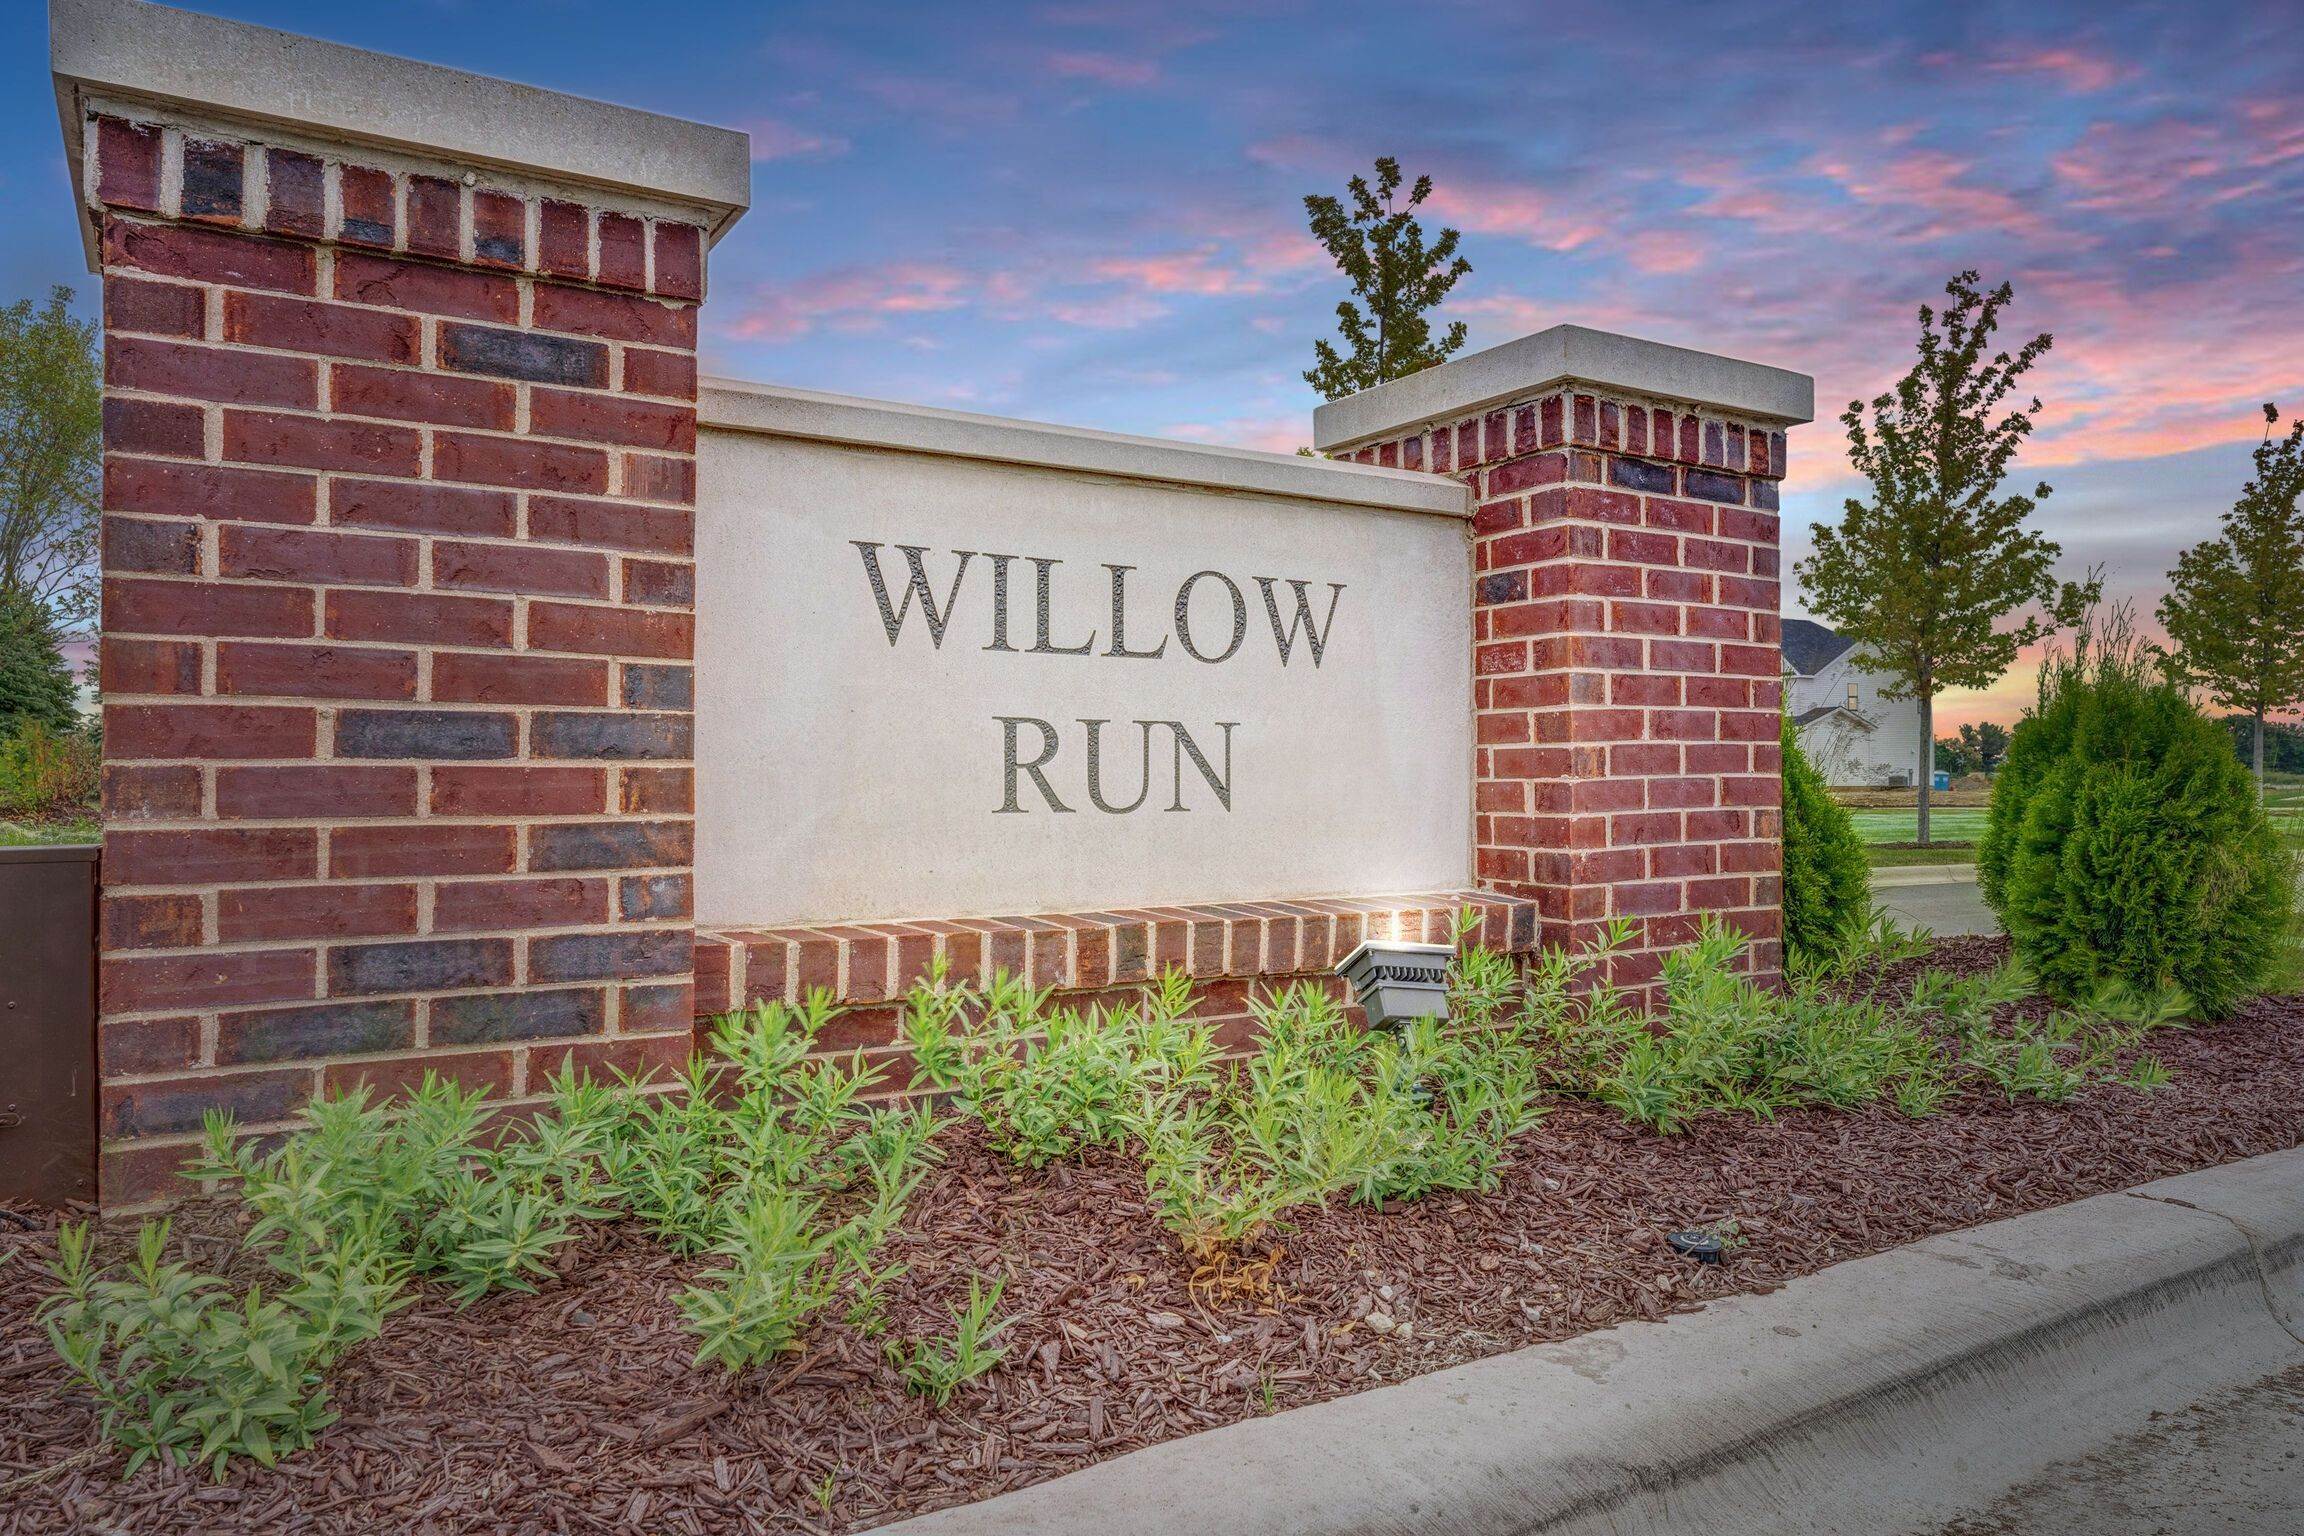 10. Willow Run建於 15262 S. Sawgrass Circle, Plainfield, IL 60544